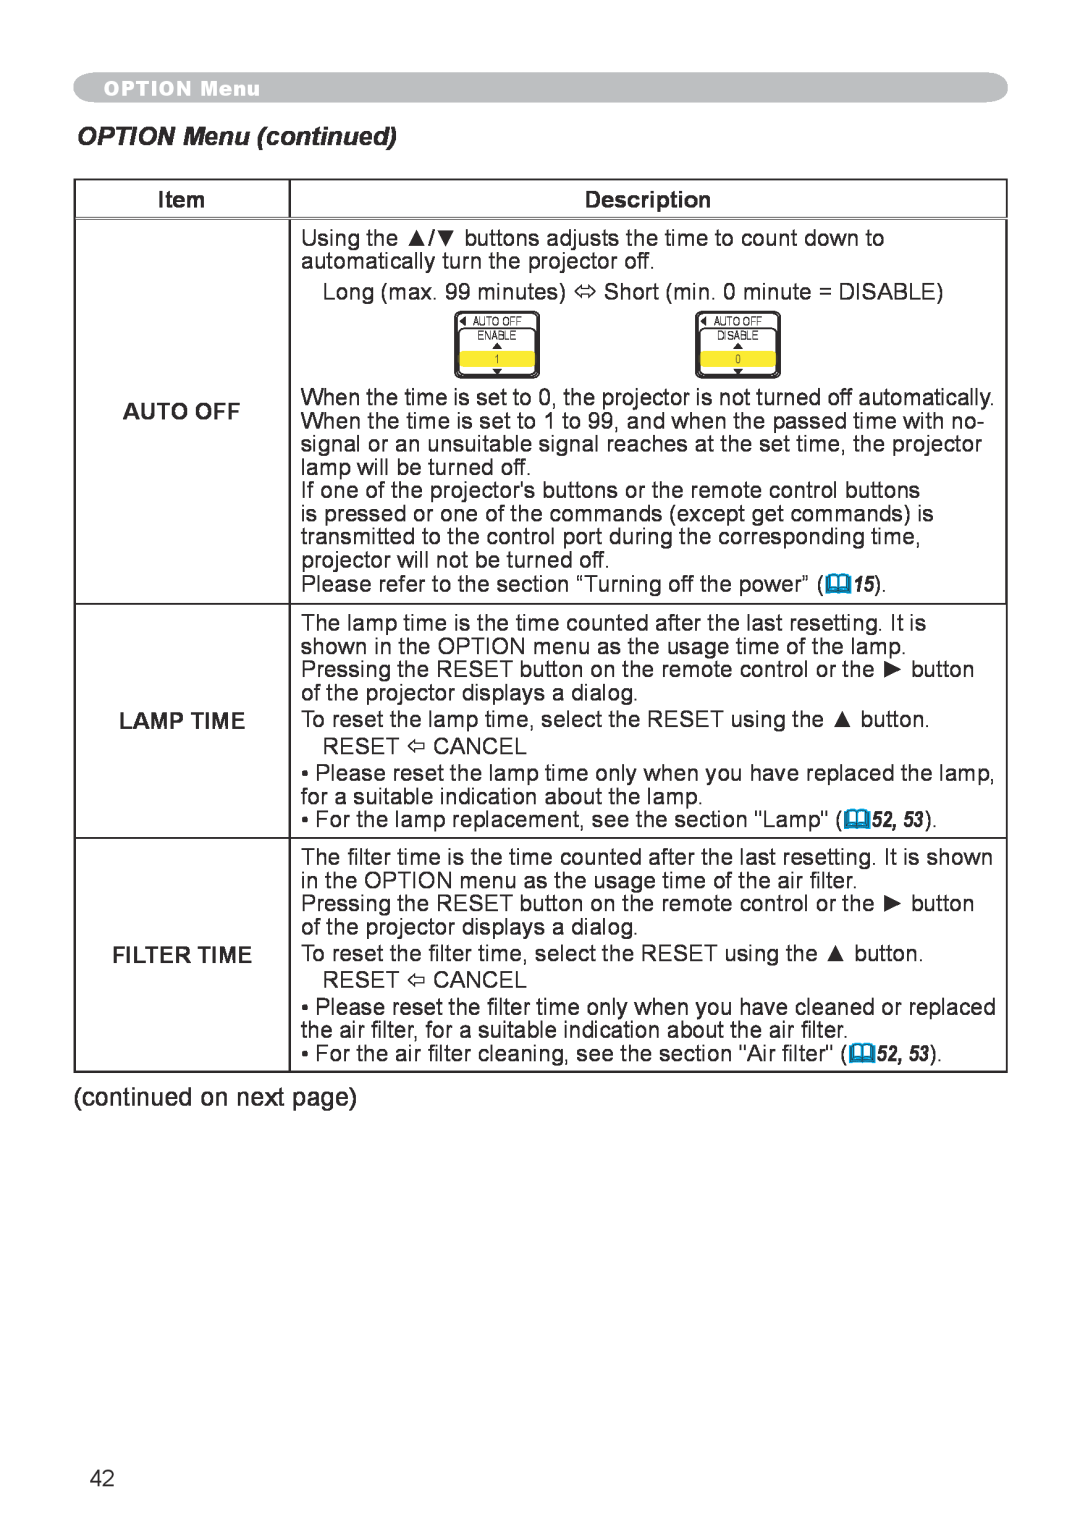 Hitachi CP-X600 user manual OPTION Menu continued, Description, Auto Off, Lamp Time, Filter Time 